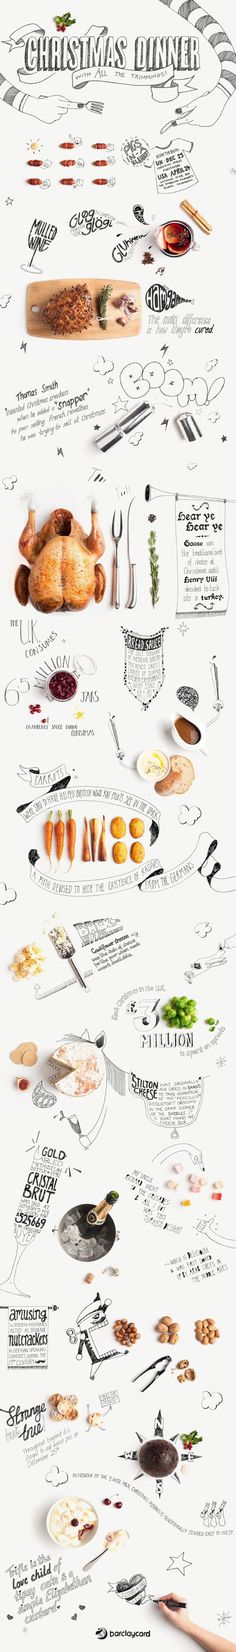 Gonzalo Azores X Barclaycard2 #dinner #illustration #art #xmas #eating